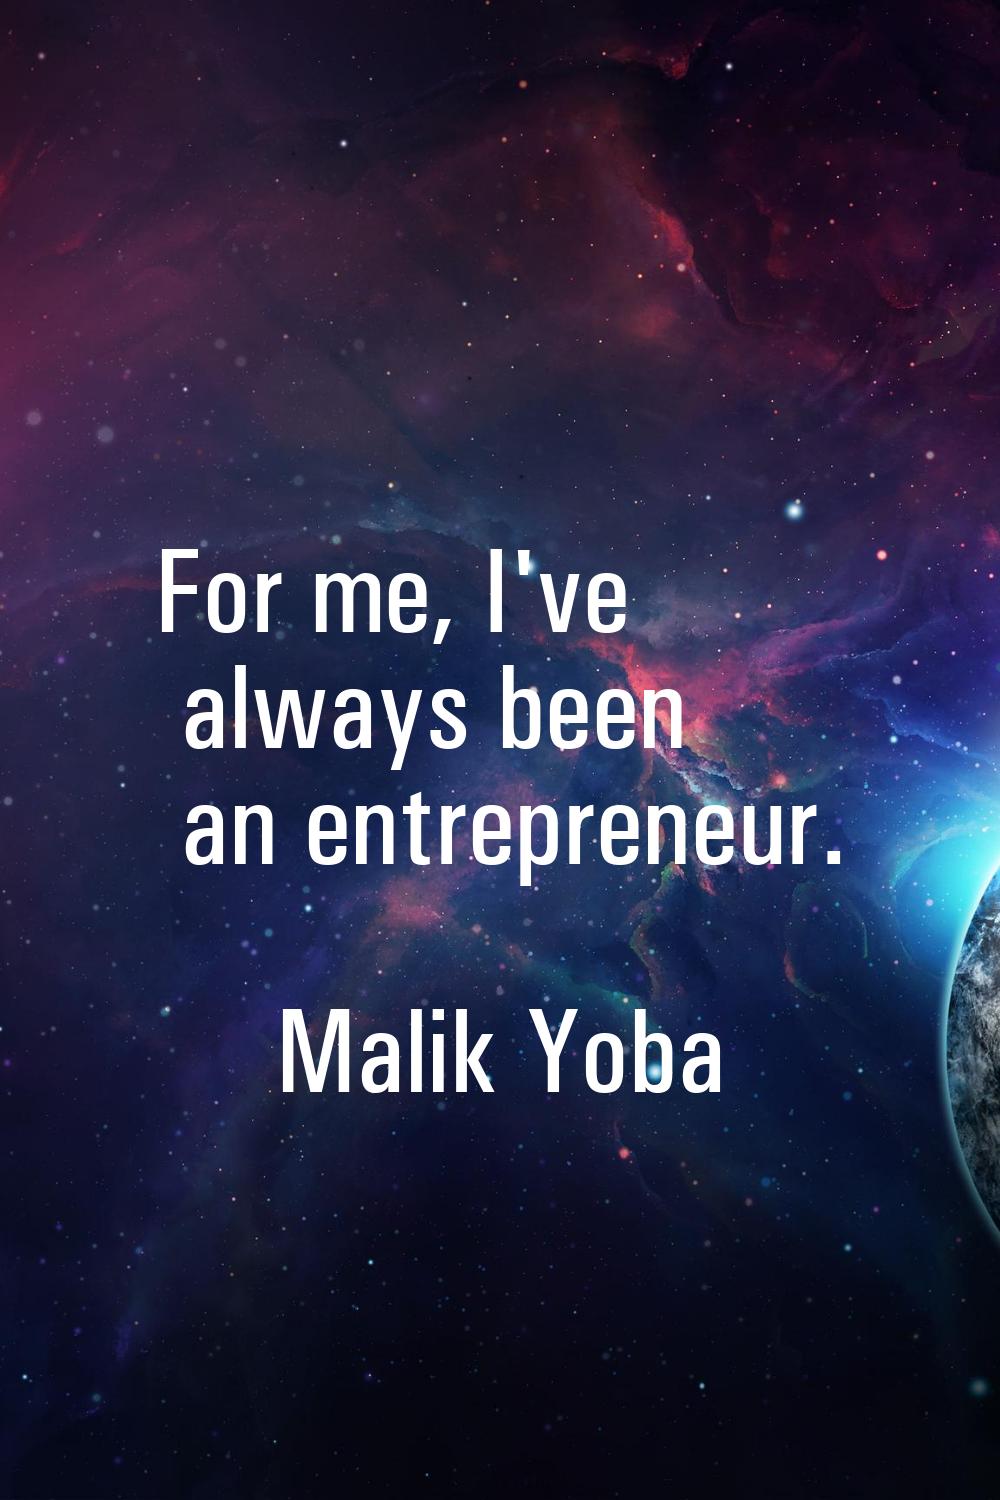 For me, I've always been an entrepreneur.